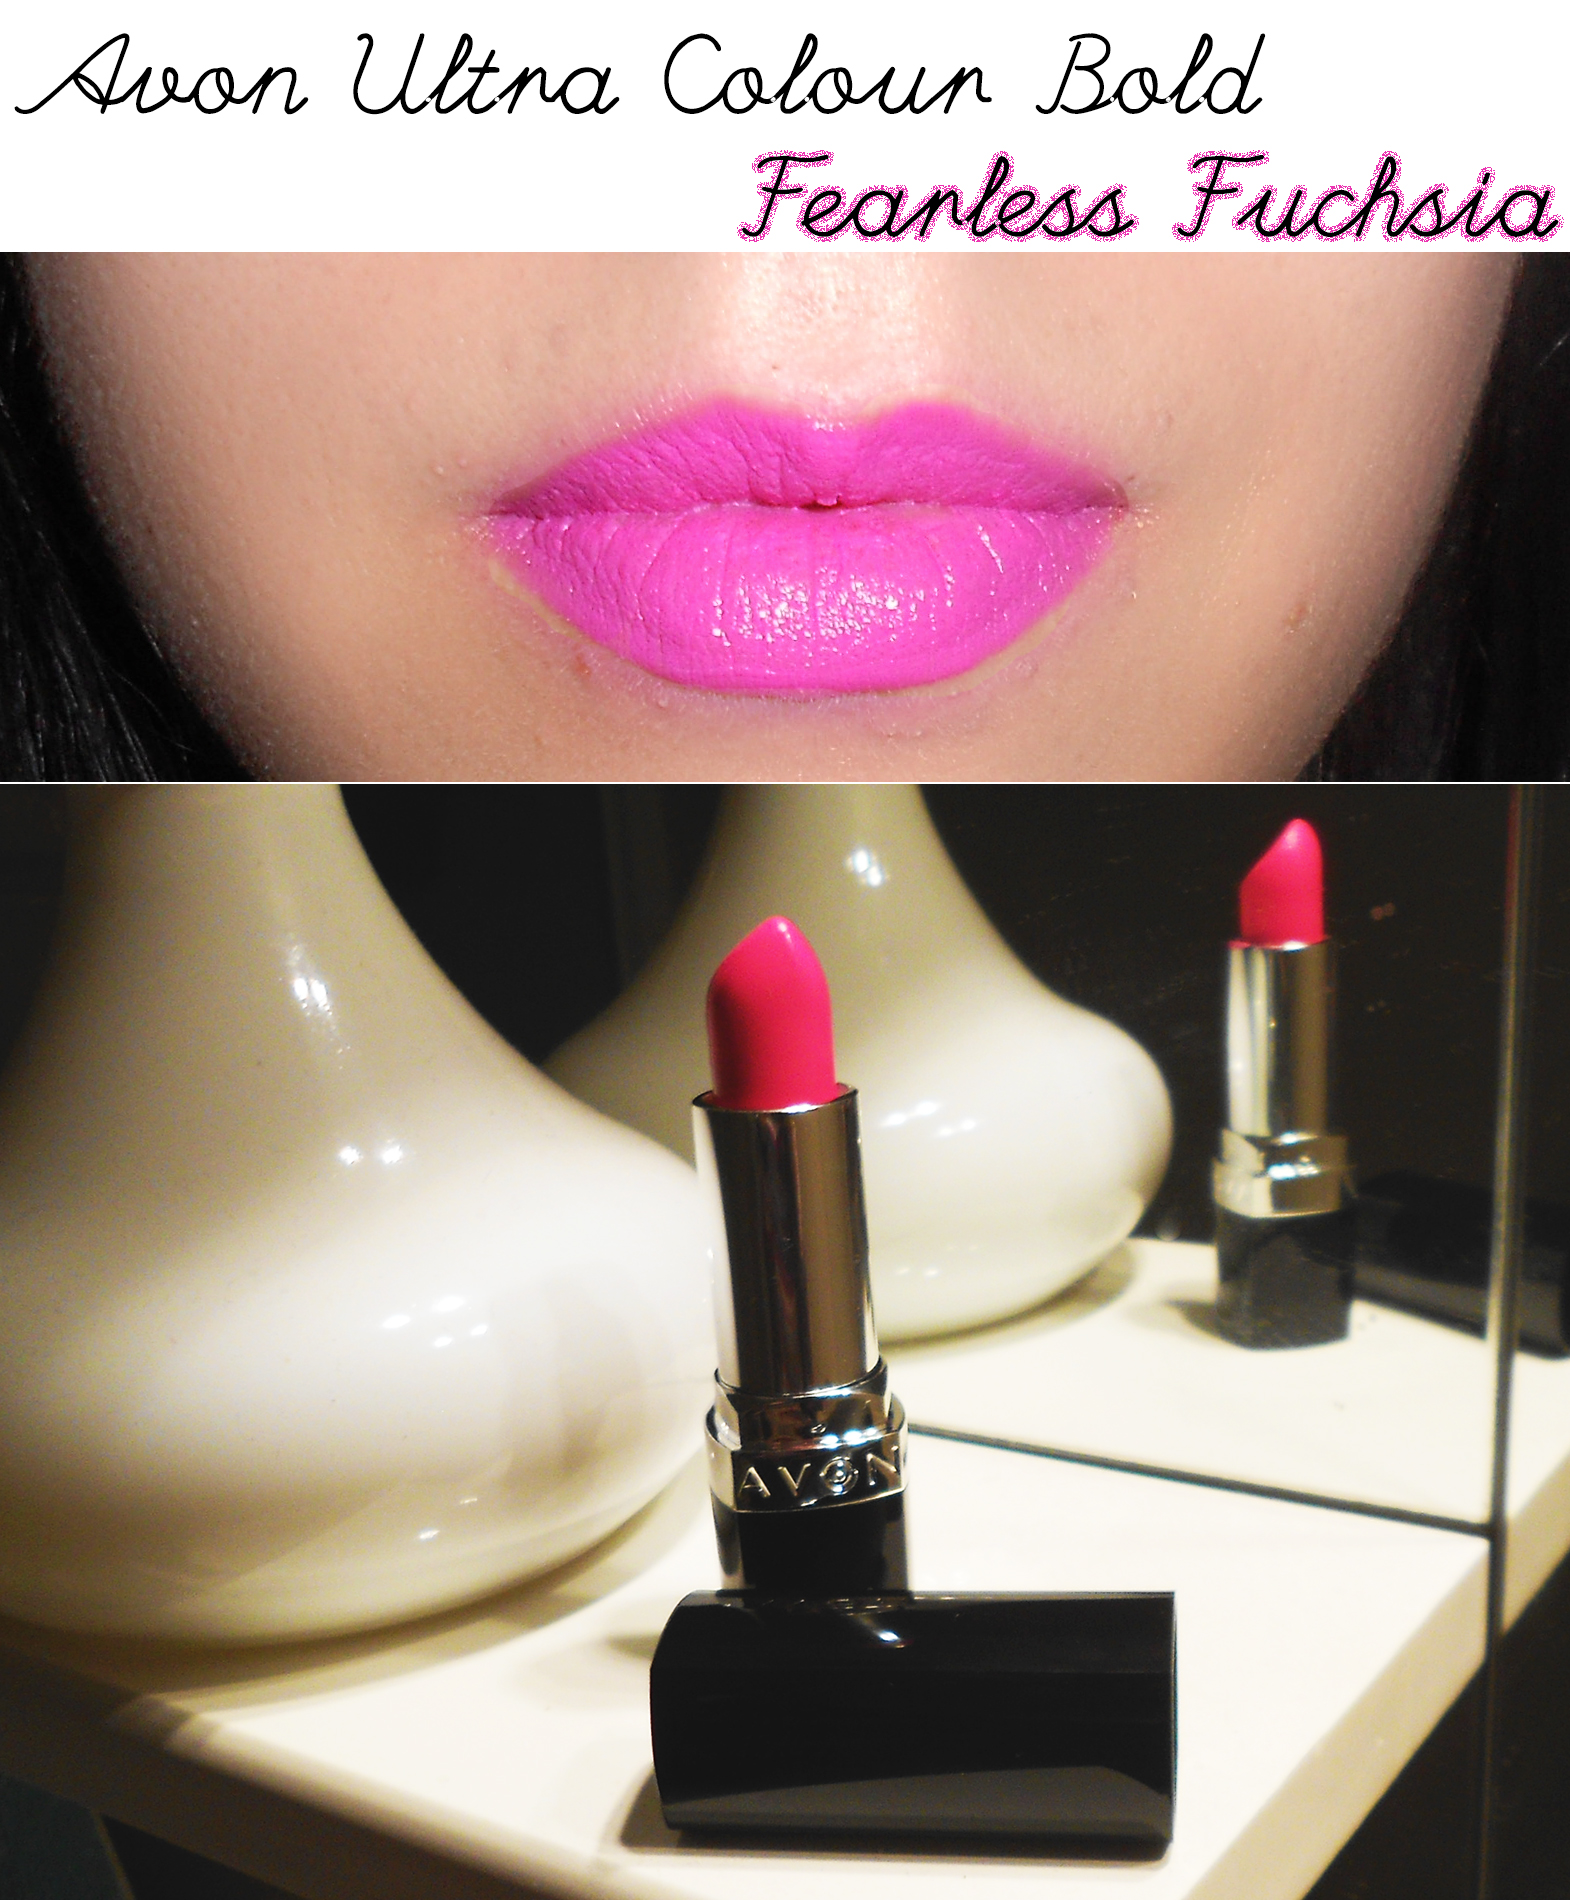 fearless fuchsia batom ultra colour avon review resenha maquilhagem maquiagem makeup swatch opinião beleza beauty blog 